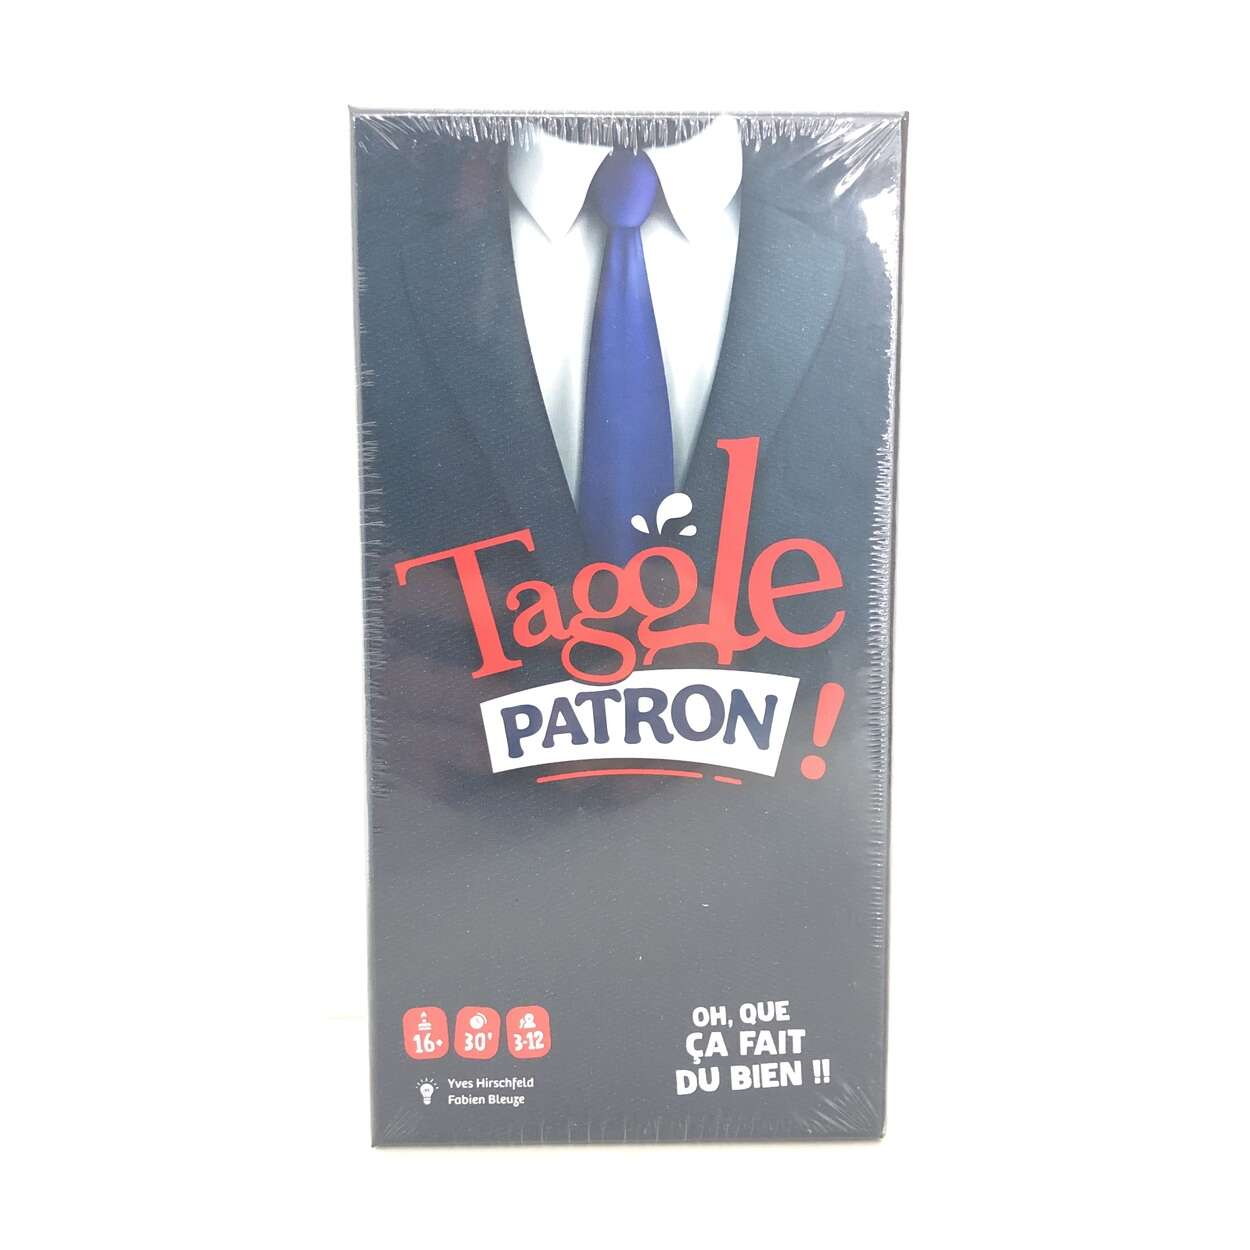 TAGGLE PATRON ! - 16 Ans +